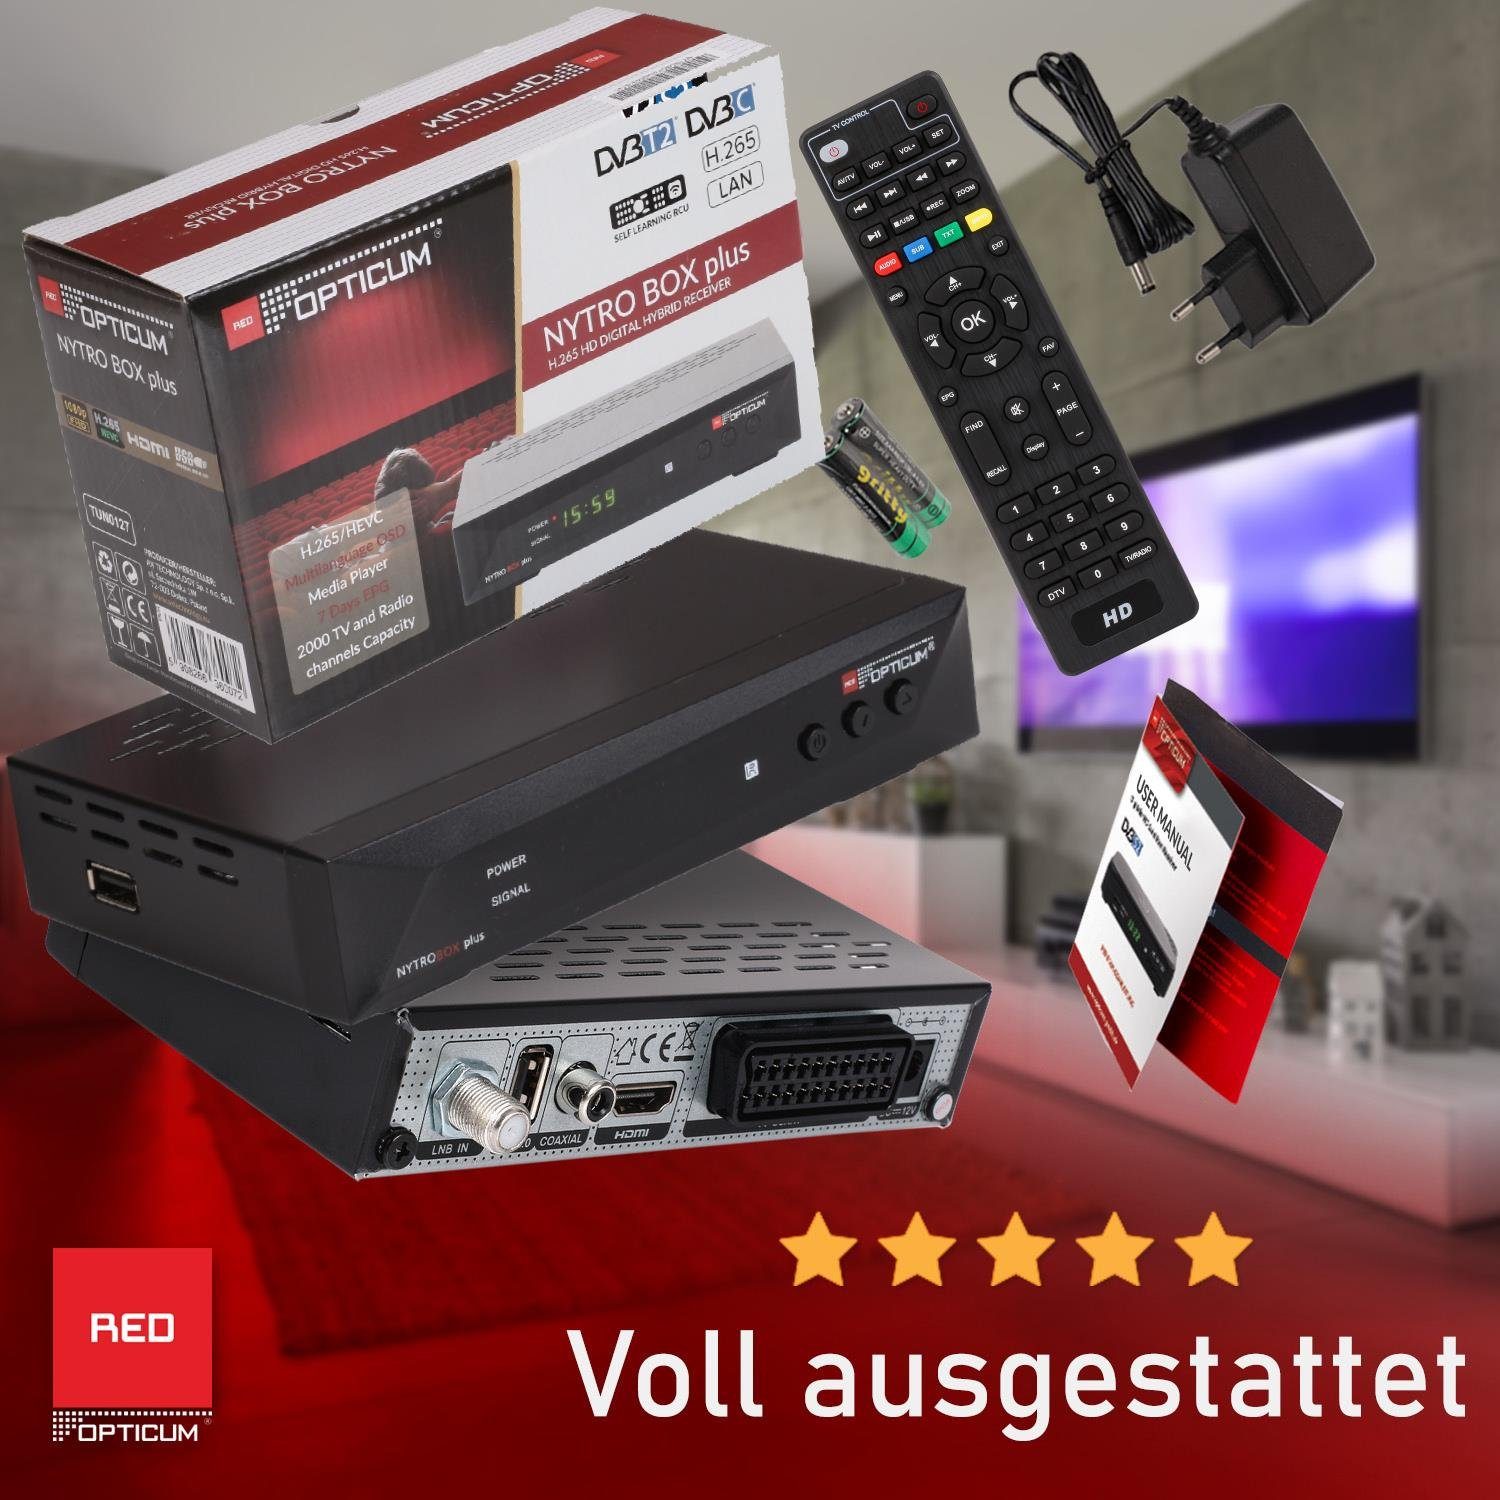 SCART) RED USB, (DVB-C Aufnahmefunktion DVB-T2 Hybrid & Receiver Receiver HD PVR, HDMI, OPTICUM Box DVB-T2 Receiver Nytro mit Plus